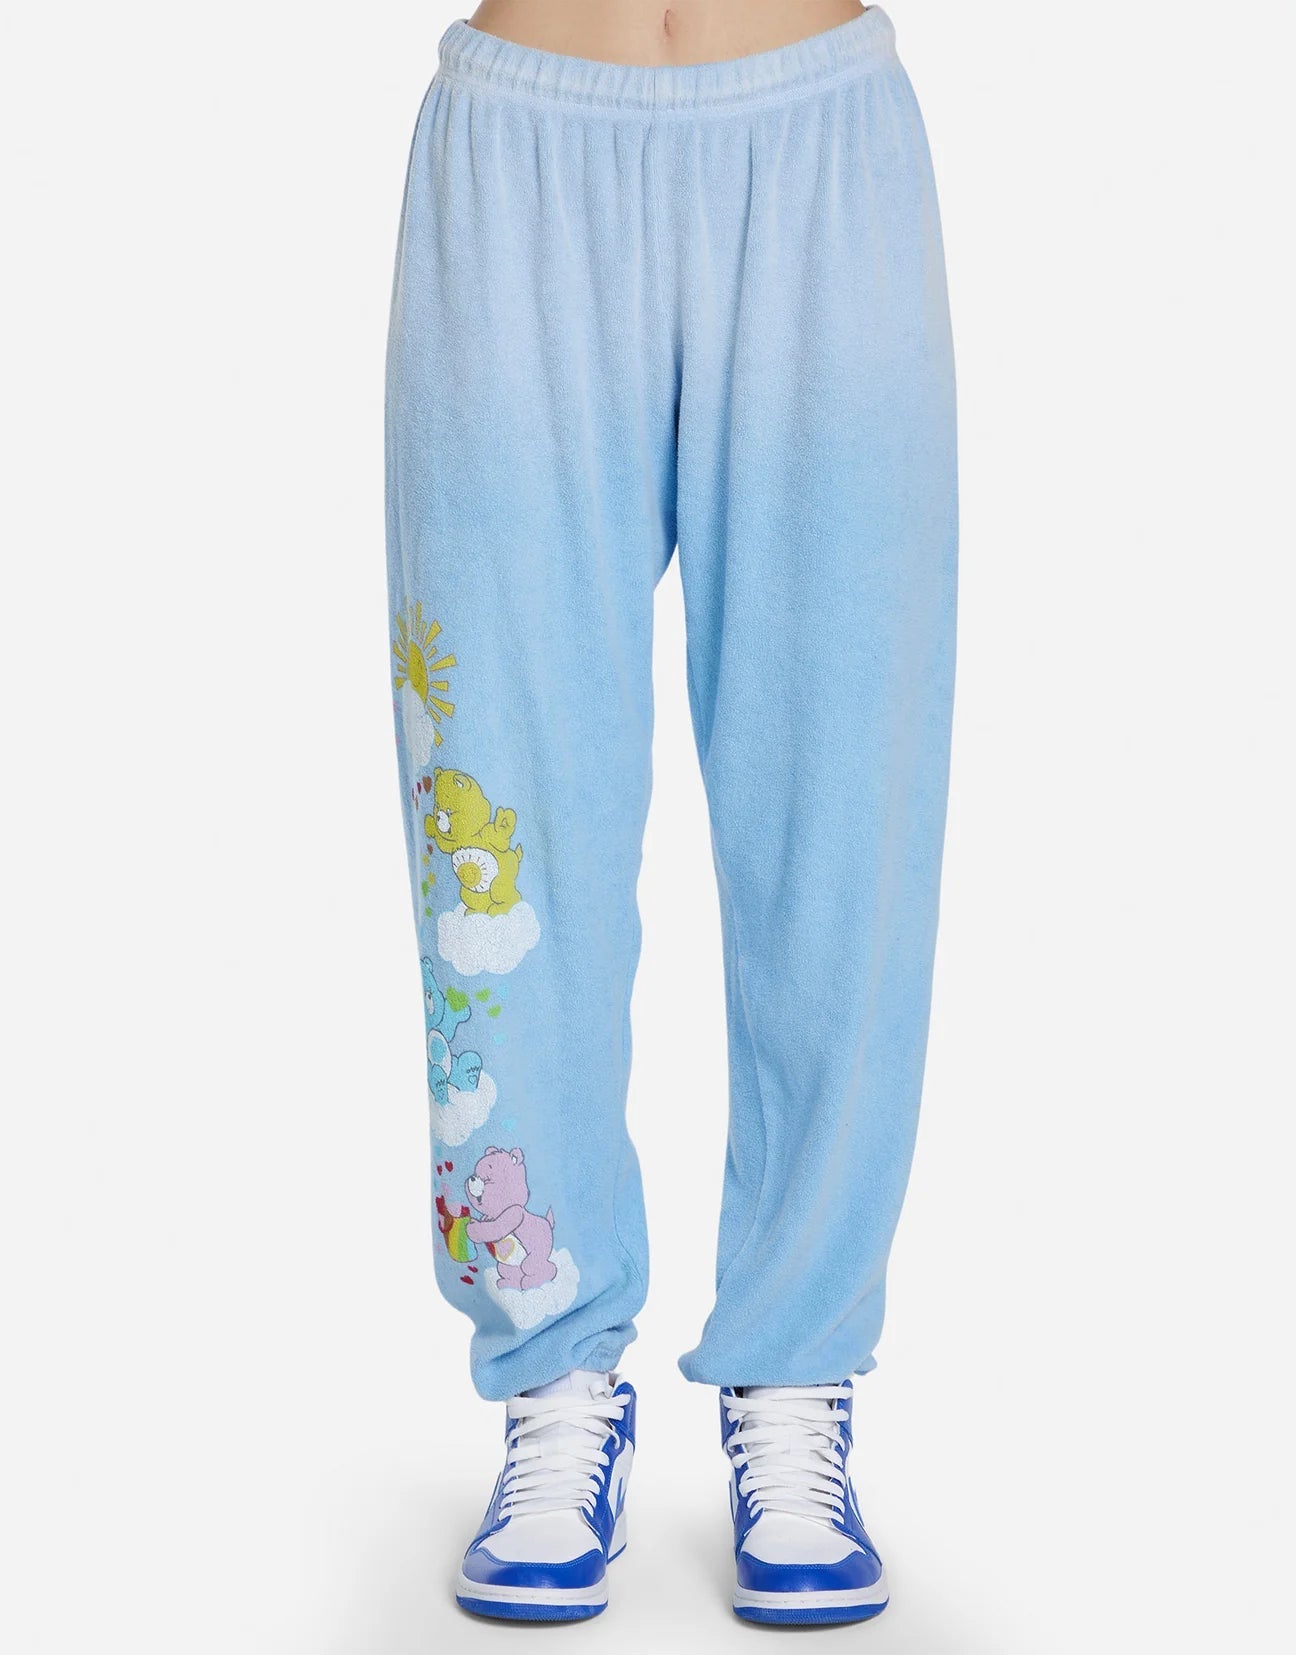 Shop Lauren Moshi Tanzy Care Bears Sweatpants - Premium Joggers from Lauren Moshi Online now at Spoiled Brat 